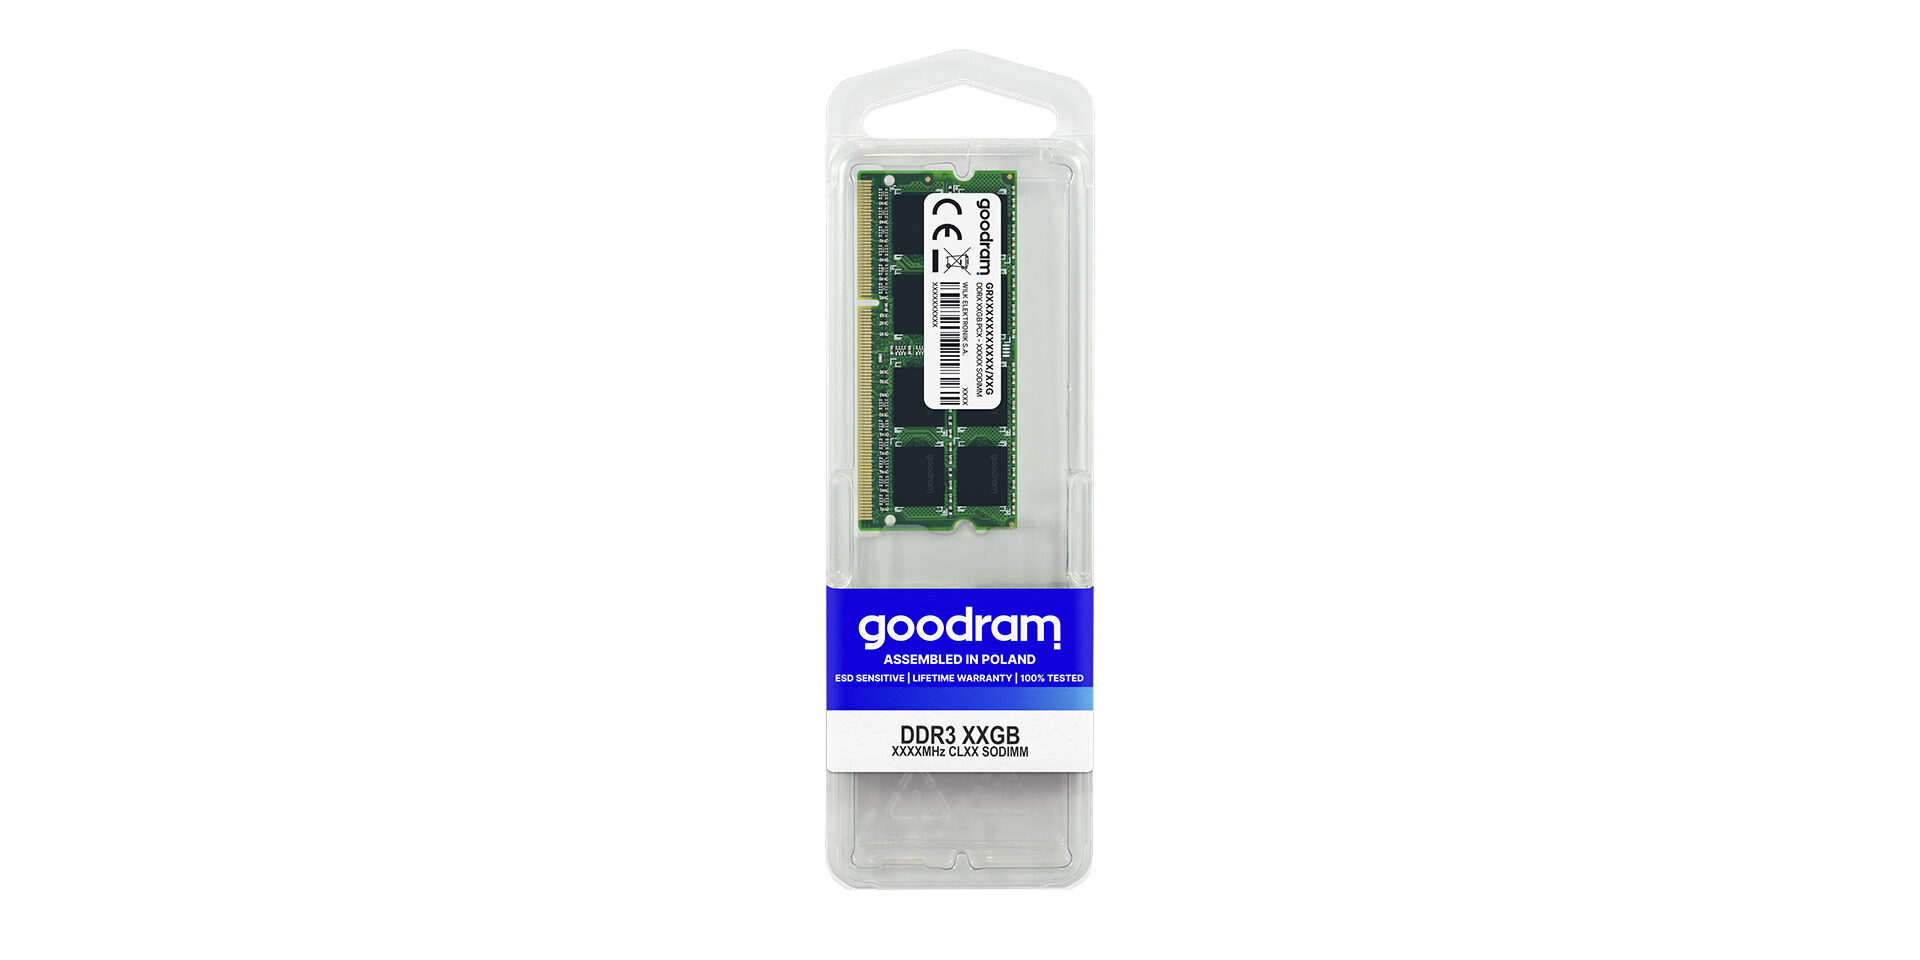 SSD DDR3 SODIMM marki Goodram w opakowaniu